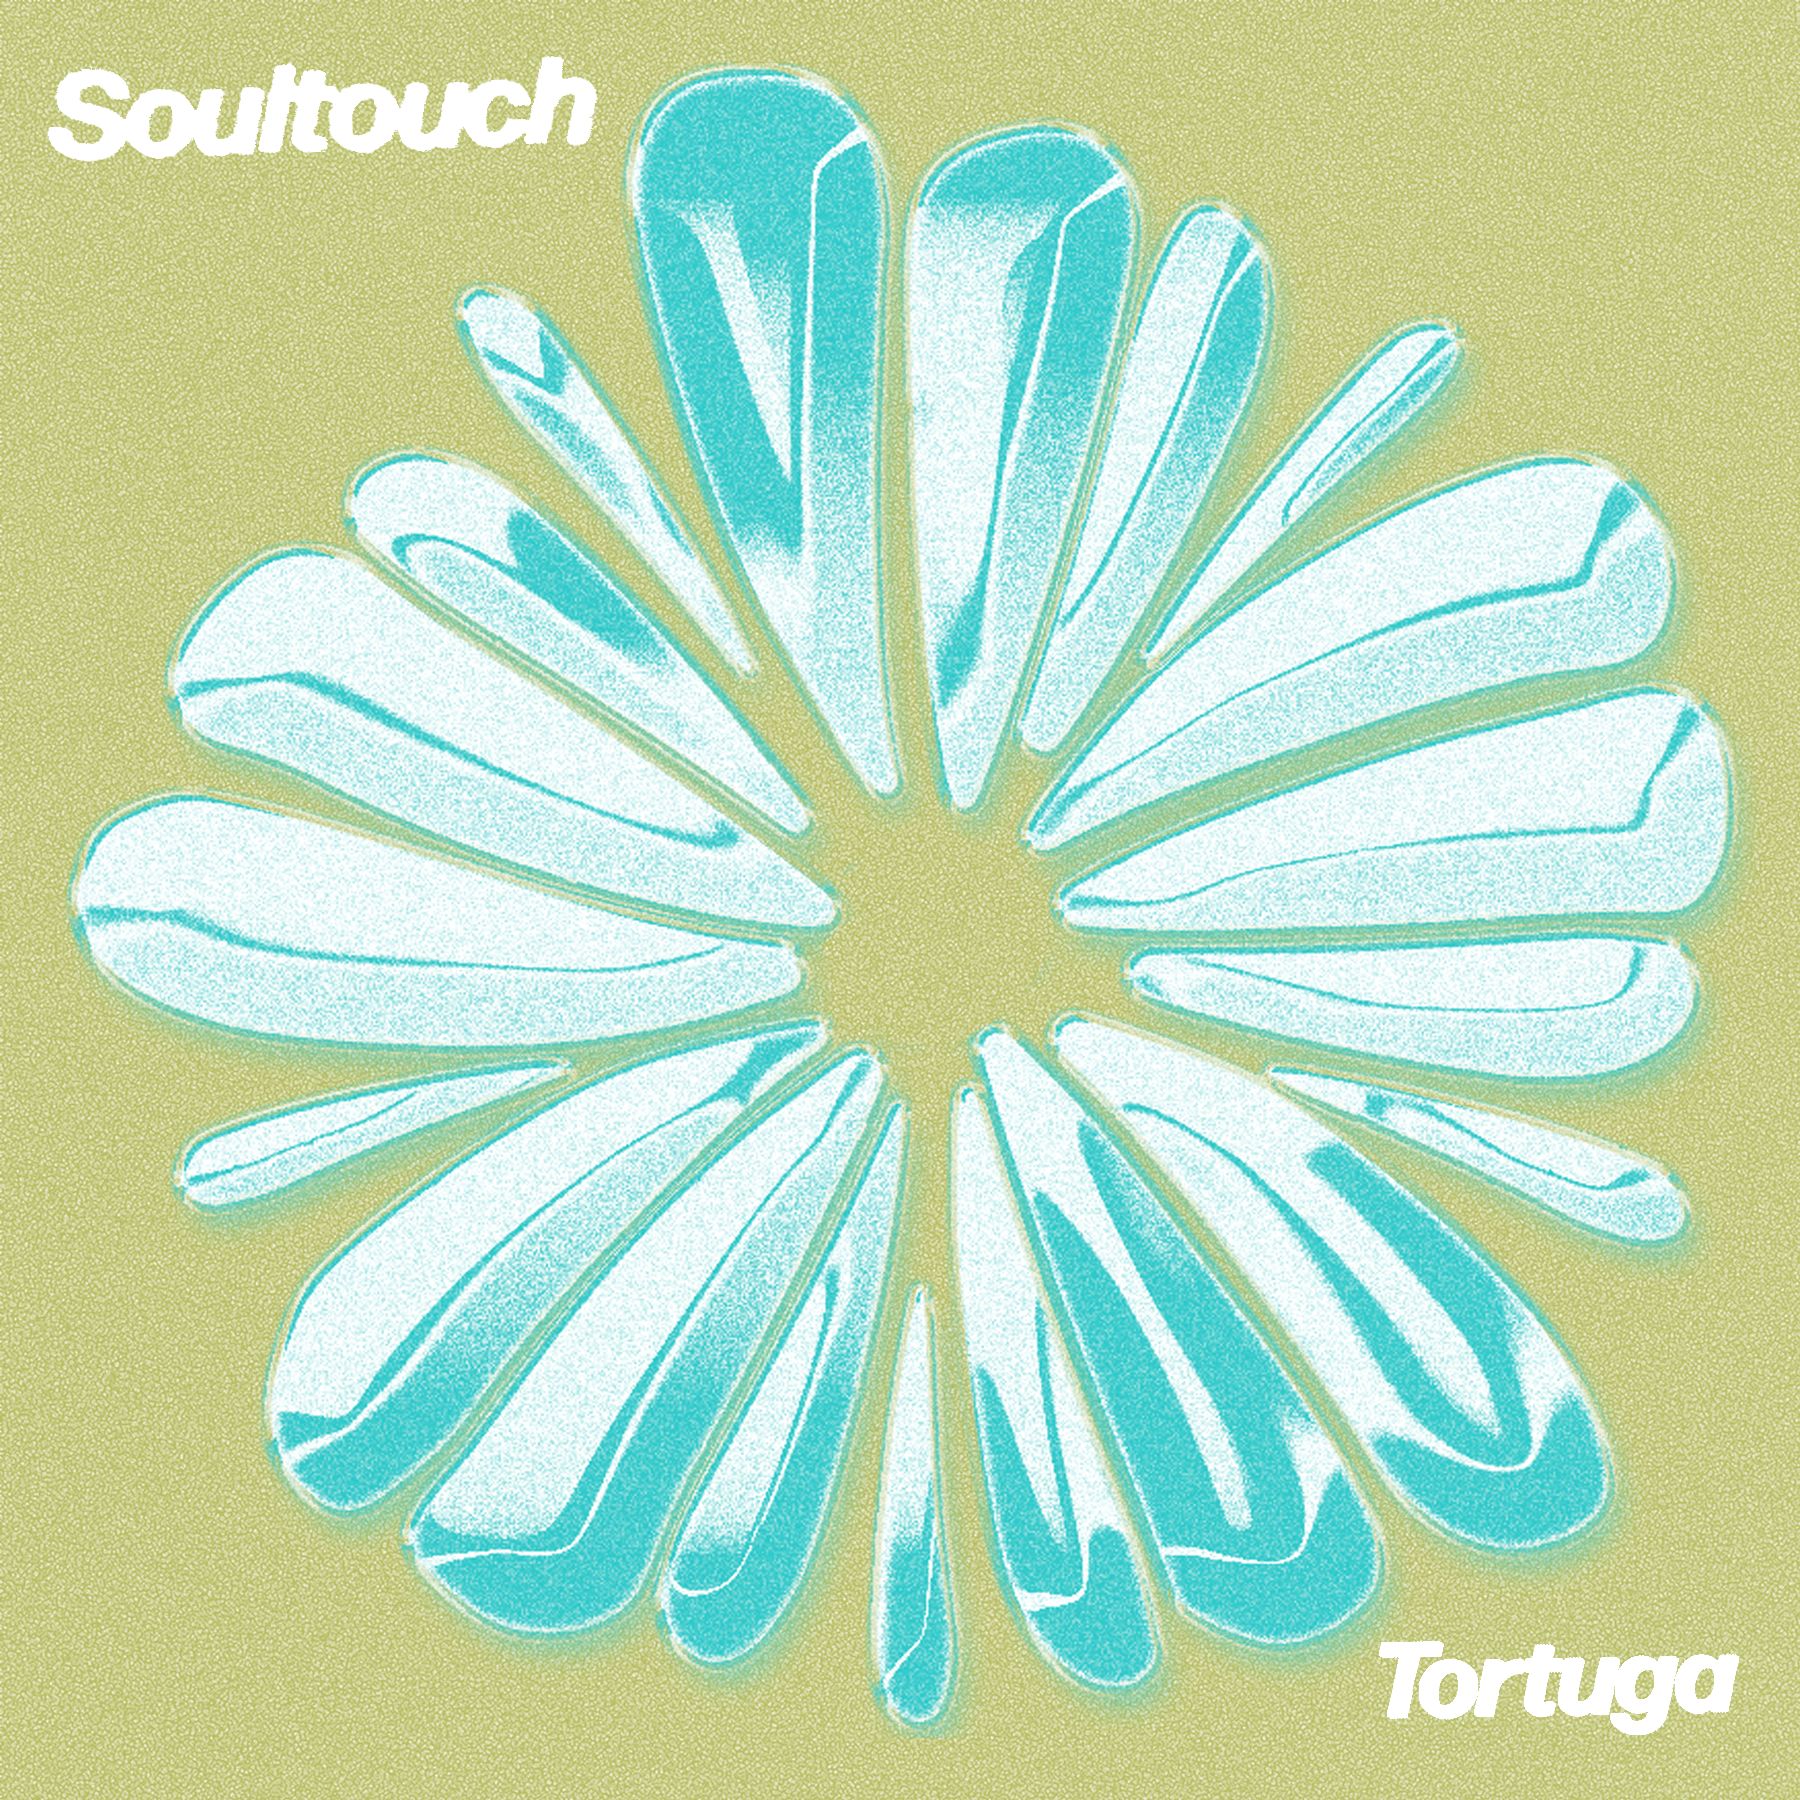 डाउनलोड PREMIERE : Tortuga - Soultouch